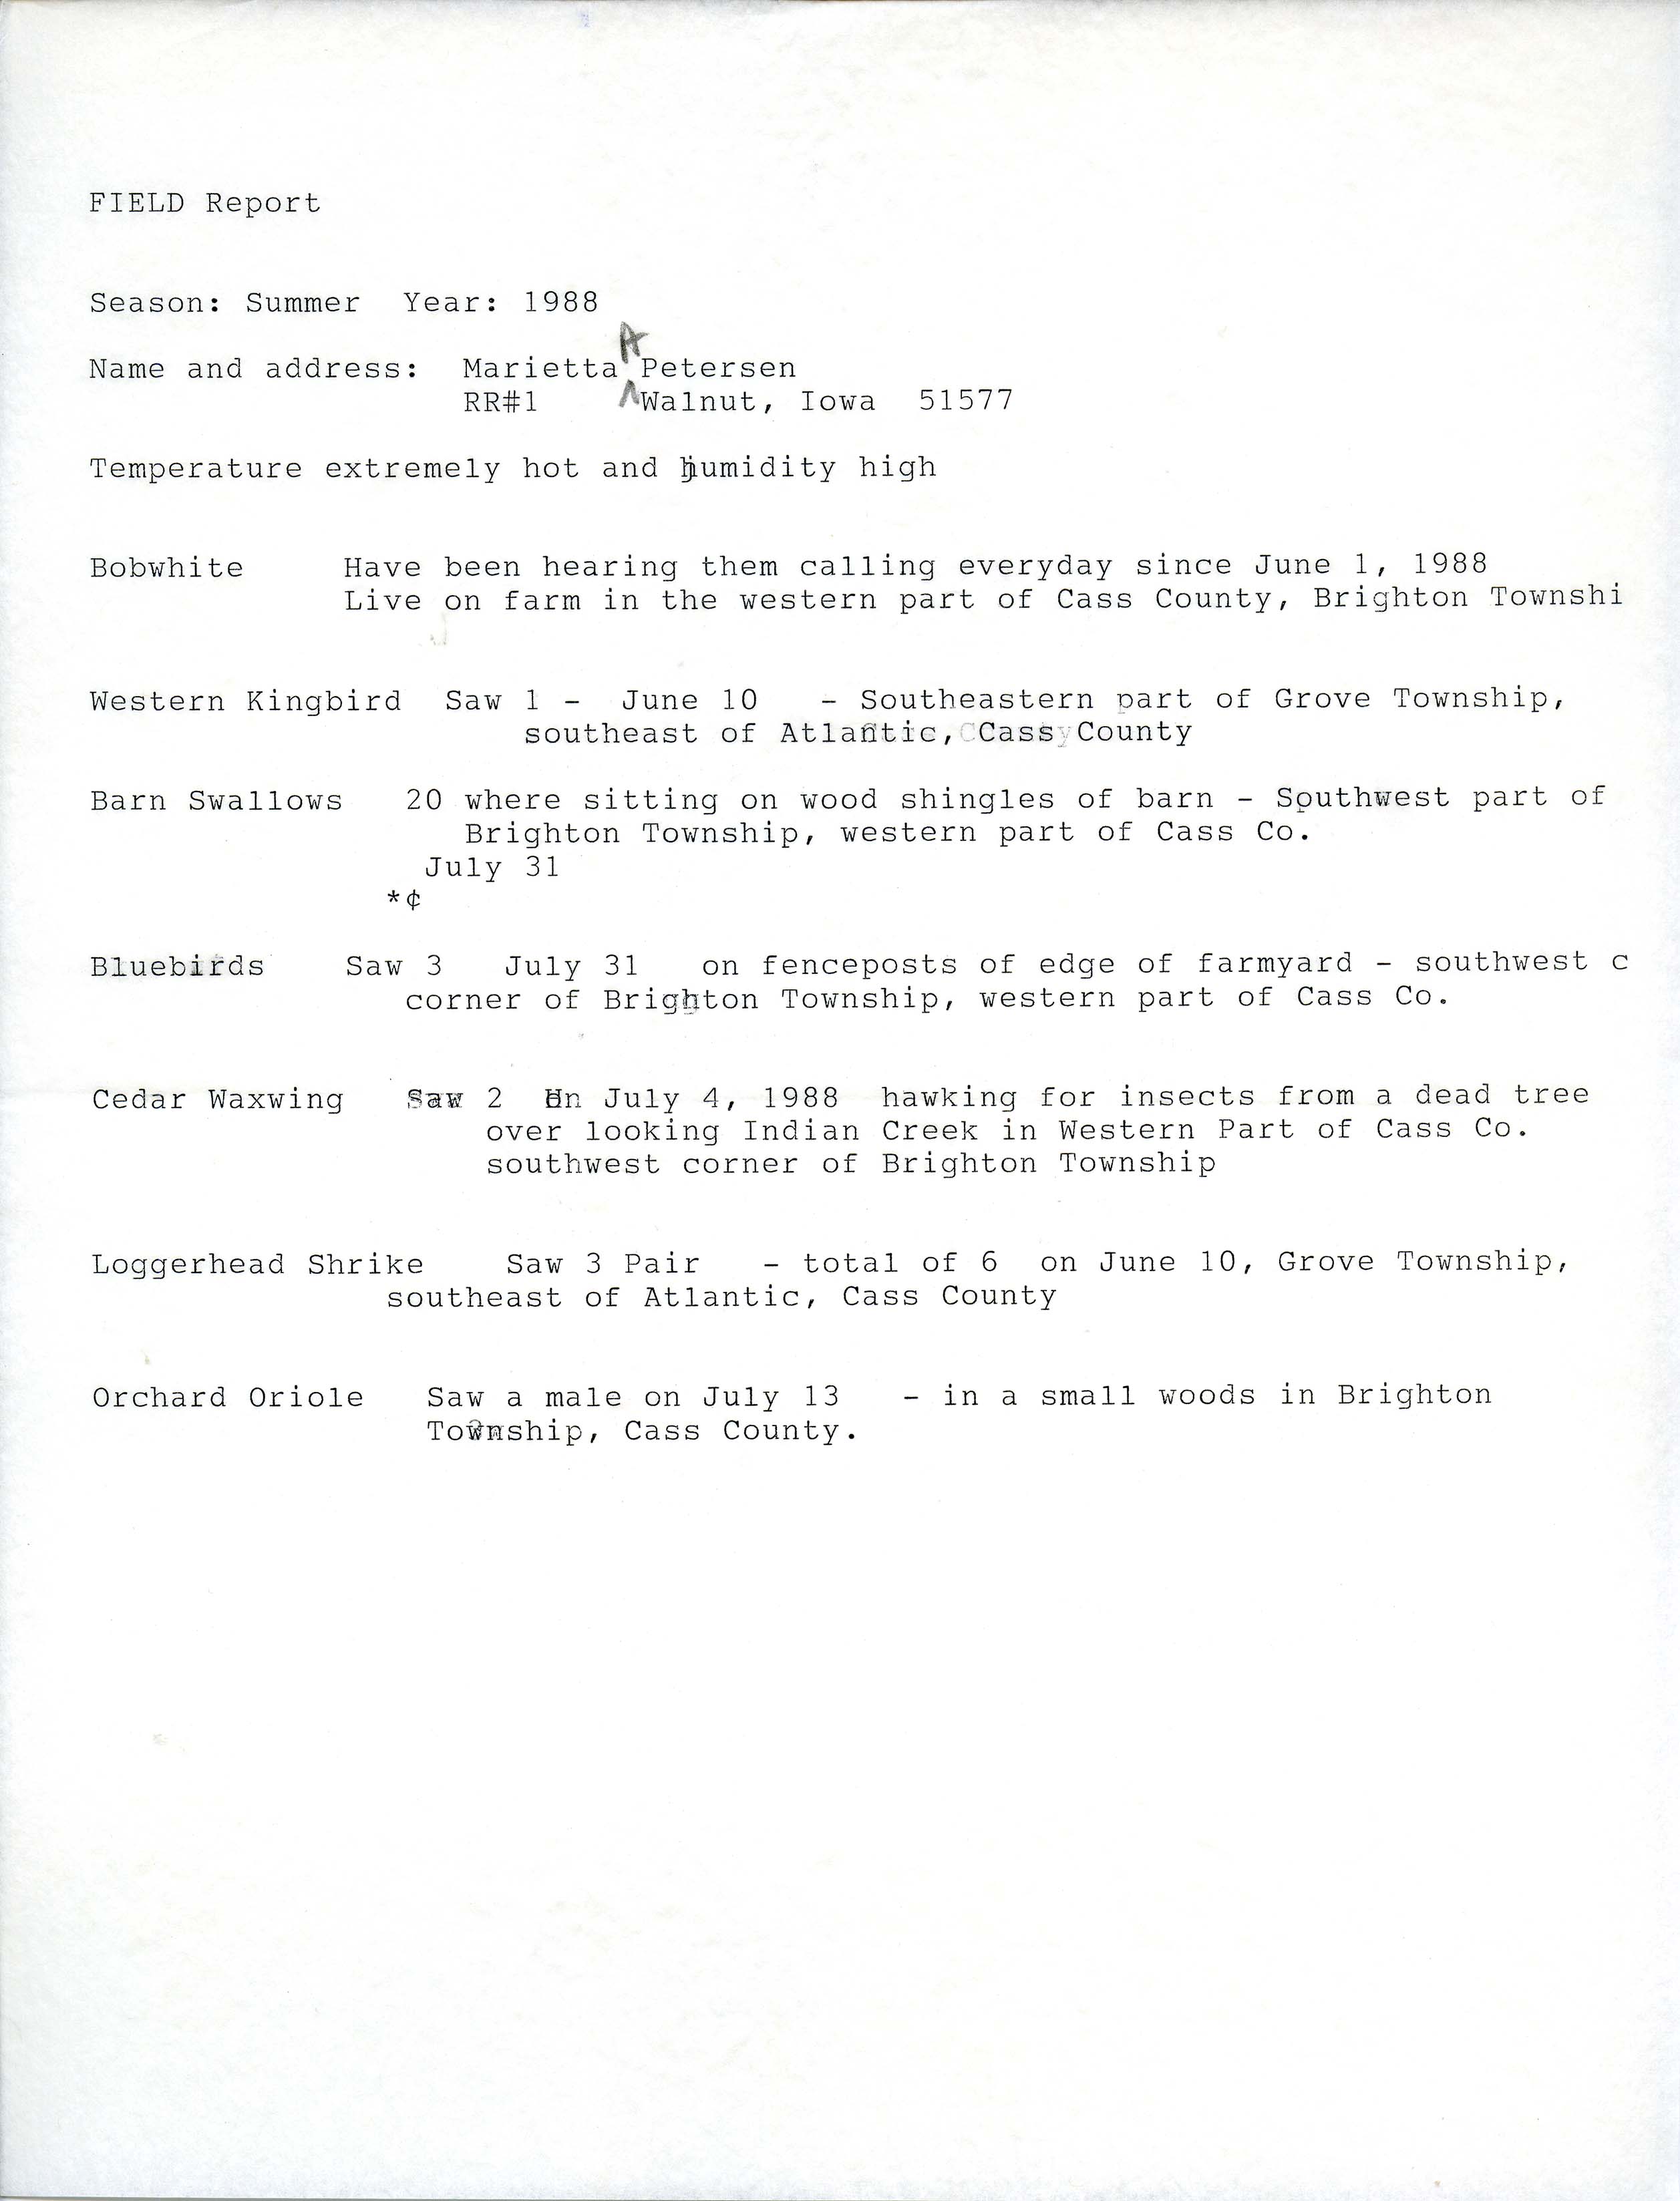 Field notes contributed by Marietta Petersen, summer 1988